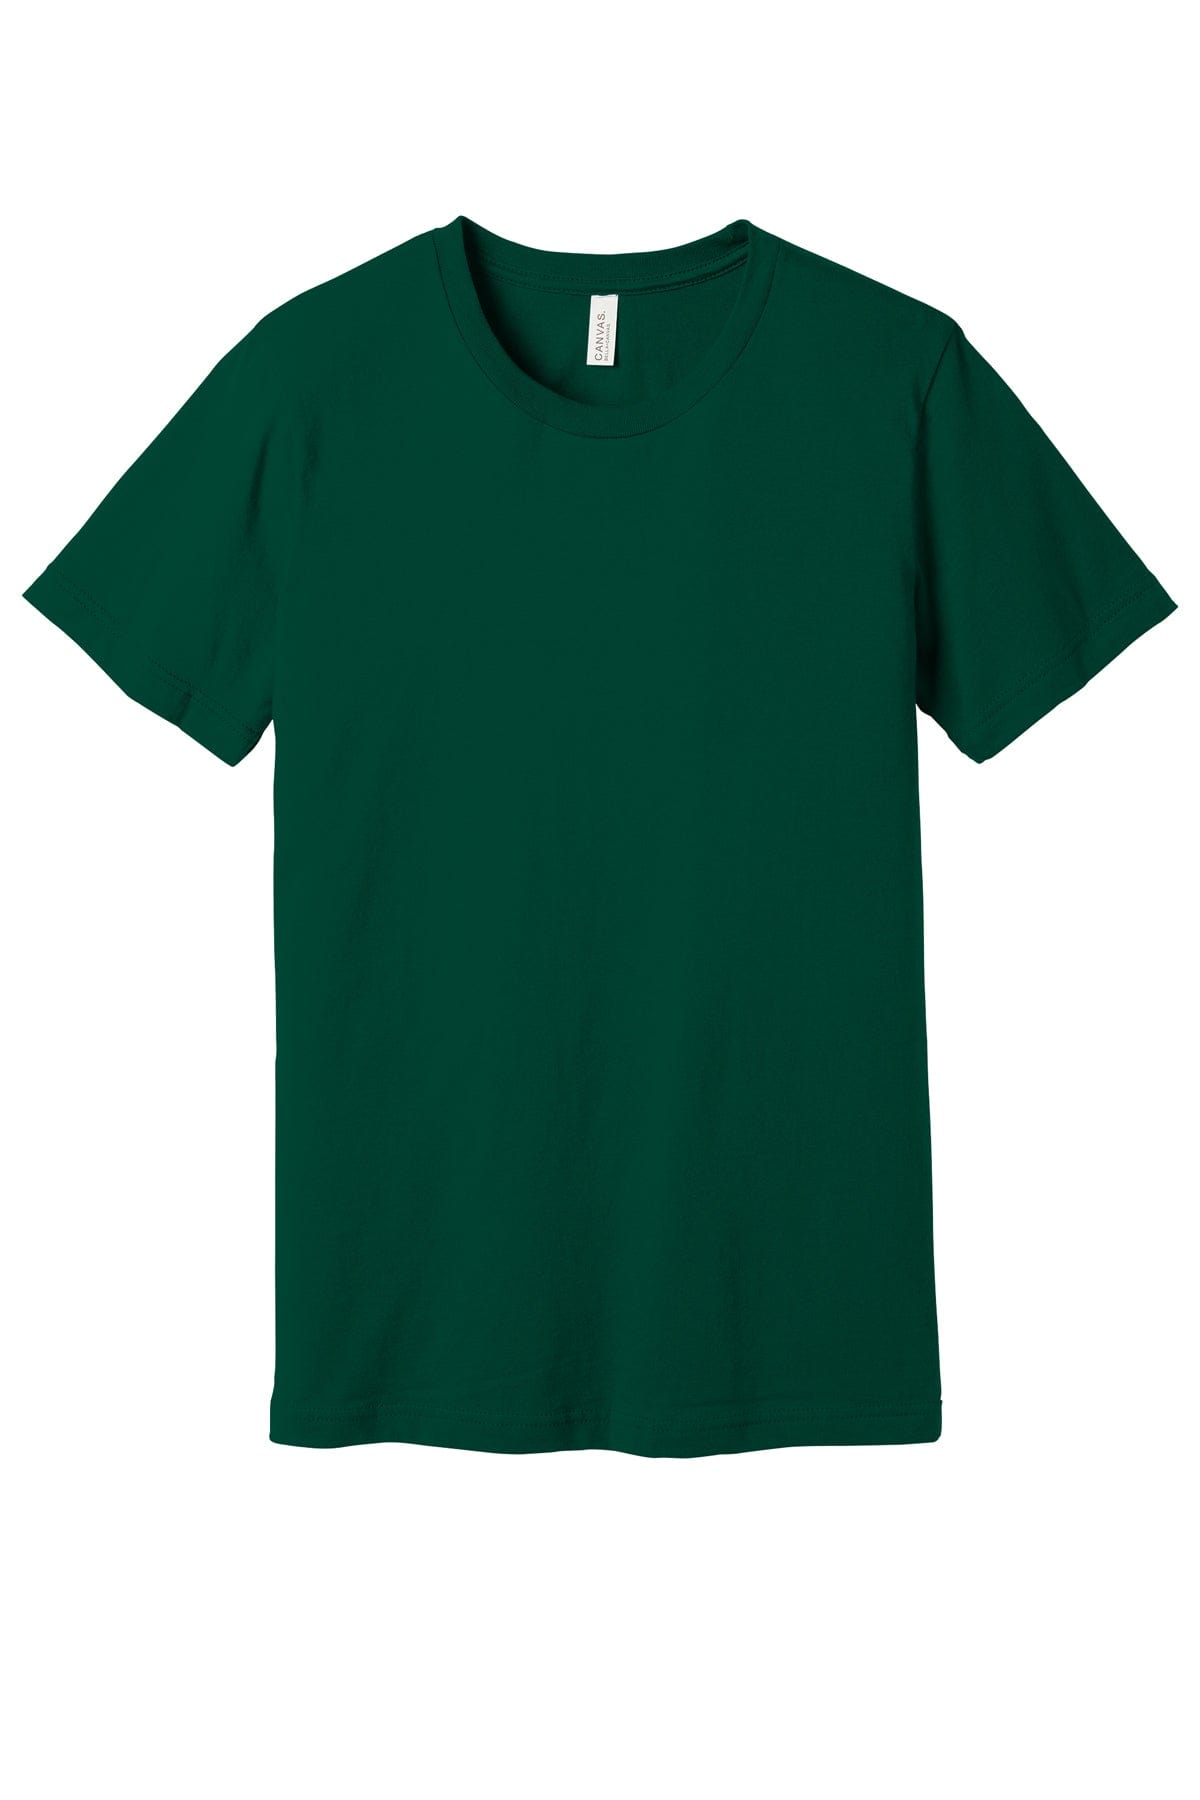 SM / Evergreen / Men's Custom Bella + Canvas Unisex Jersey Short Sleeve Tee